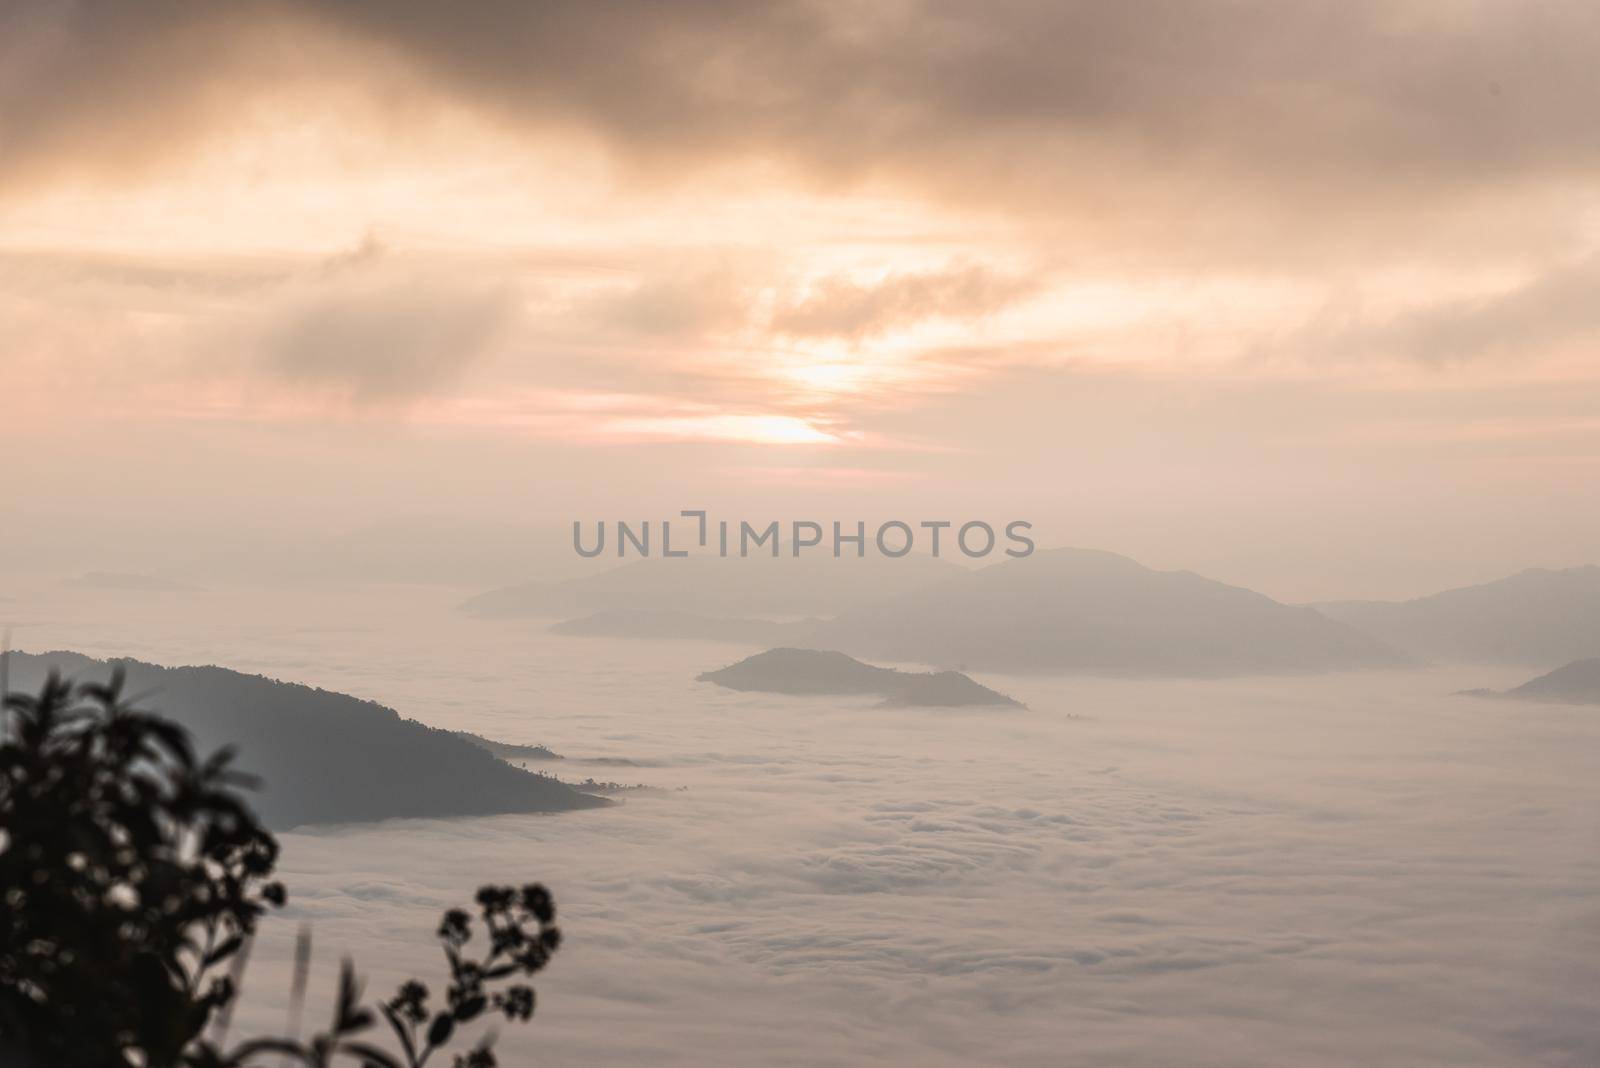 fog and cloud mountain valley landscape by Wmpix